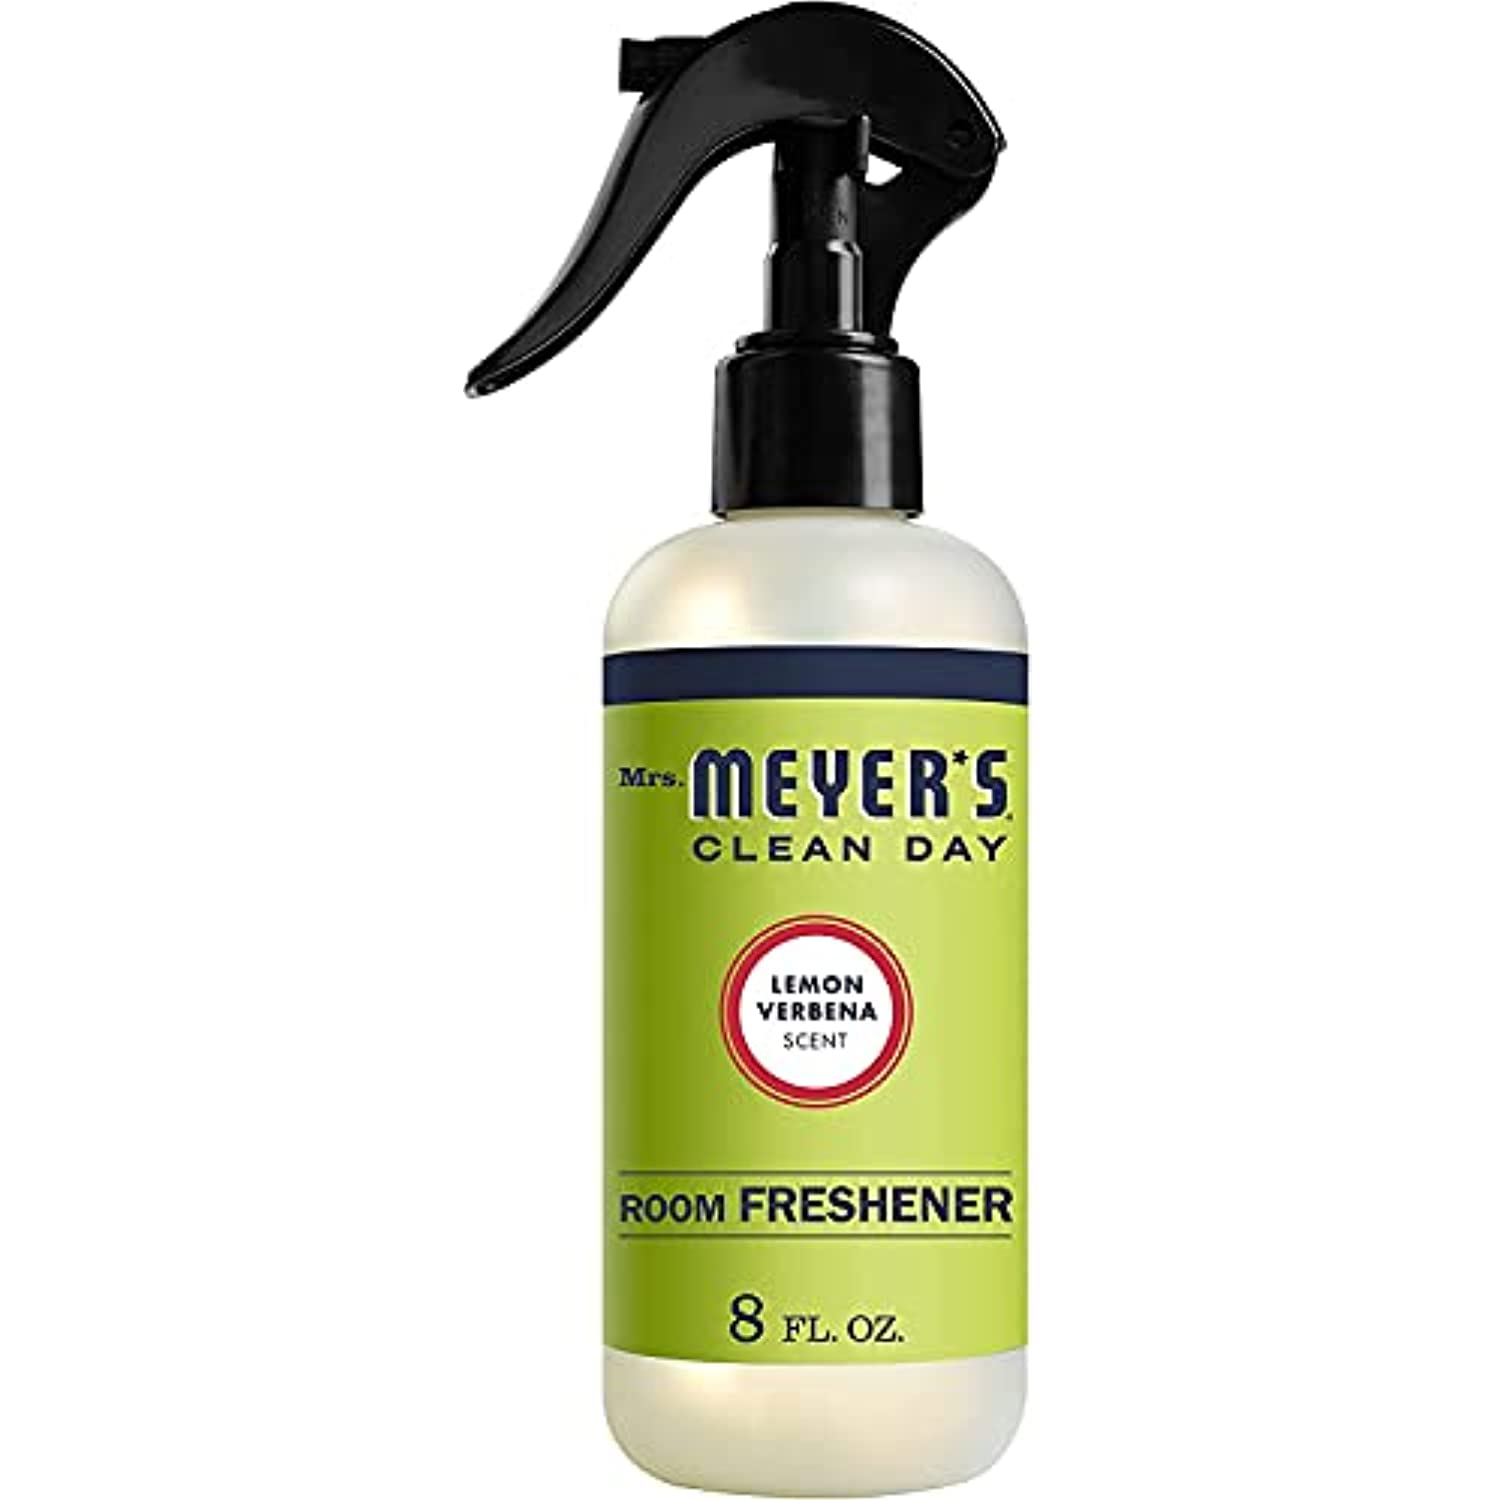 Mrs. Meyer’s Clean Day Room Freshener Spray, Lemon Verbena Scent, Instant & Refreshing Fragrance Made with Essential Oils, 8 fl oz Spray Bottle (Pack of 1)